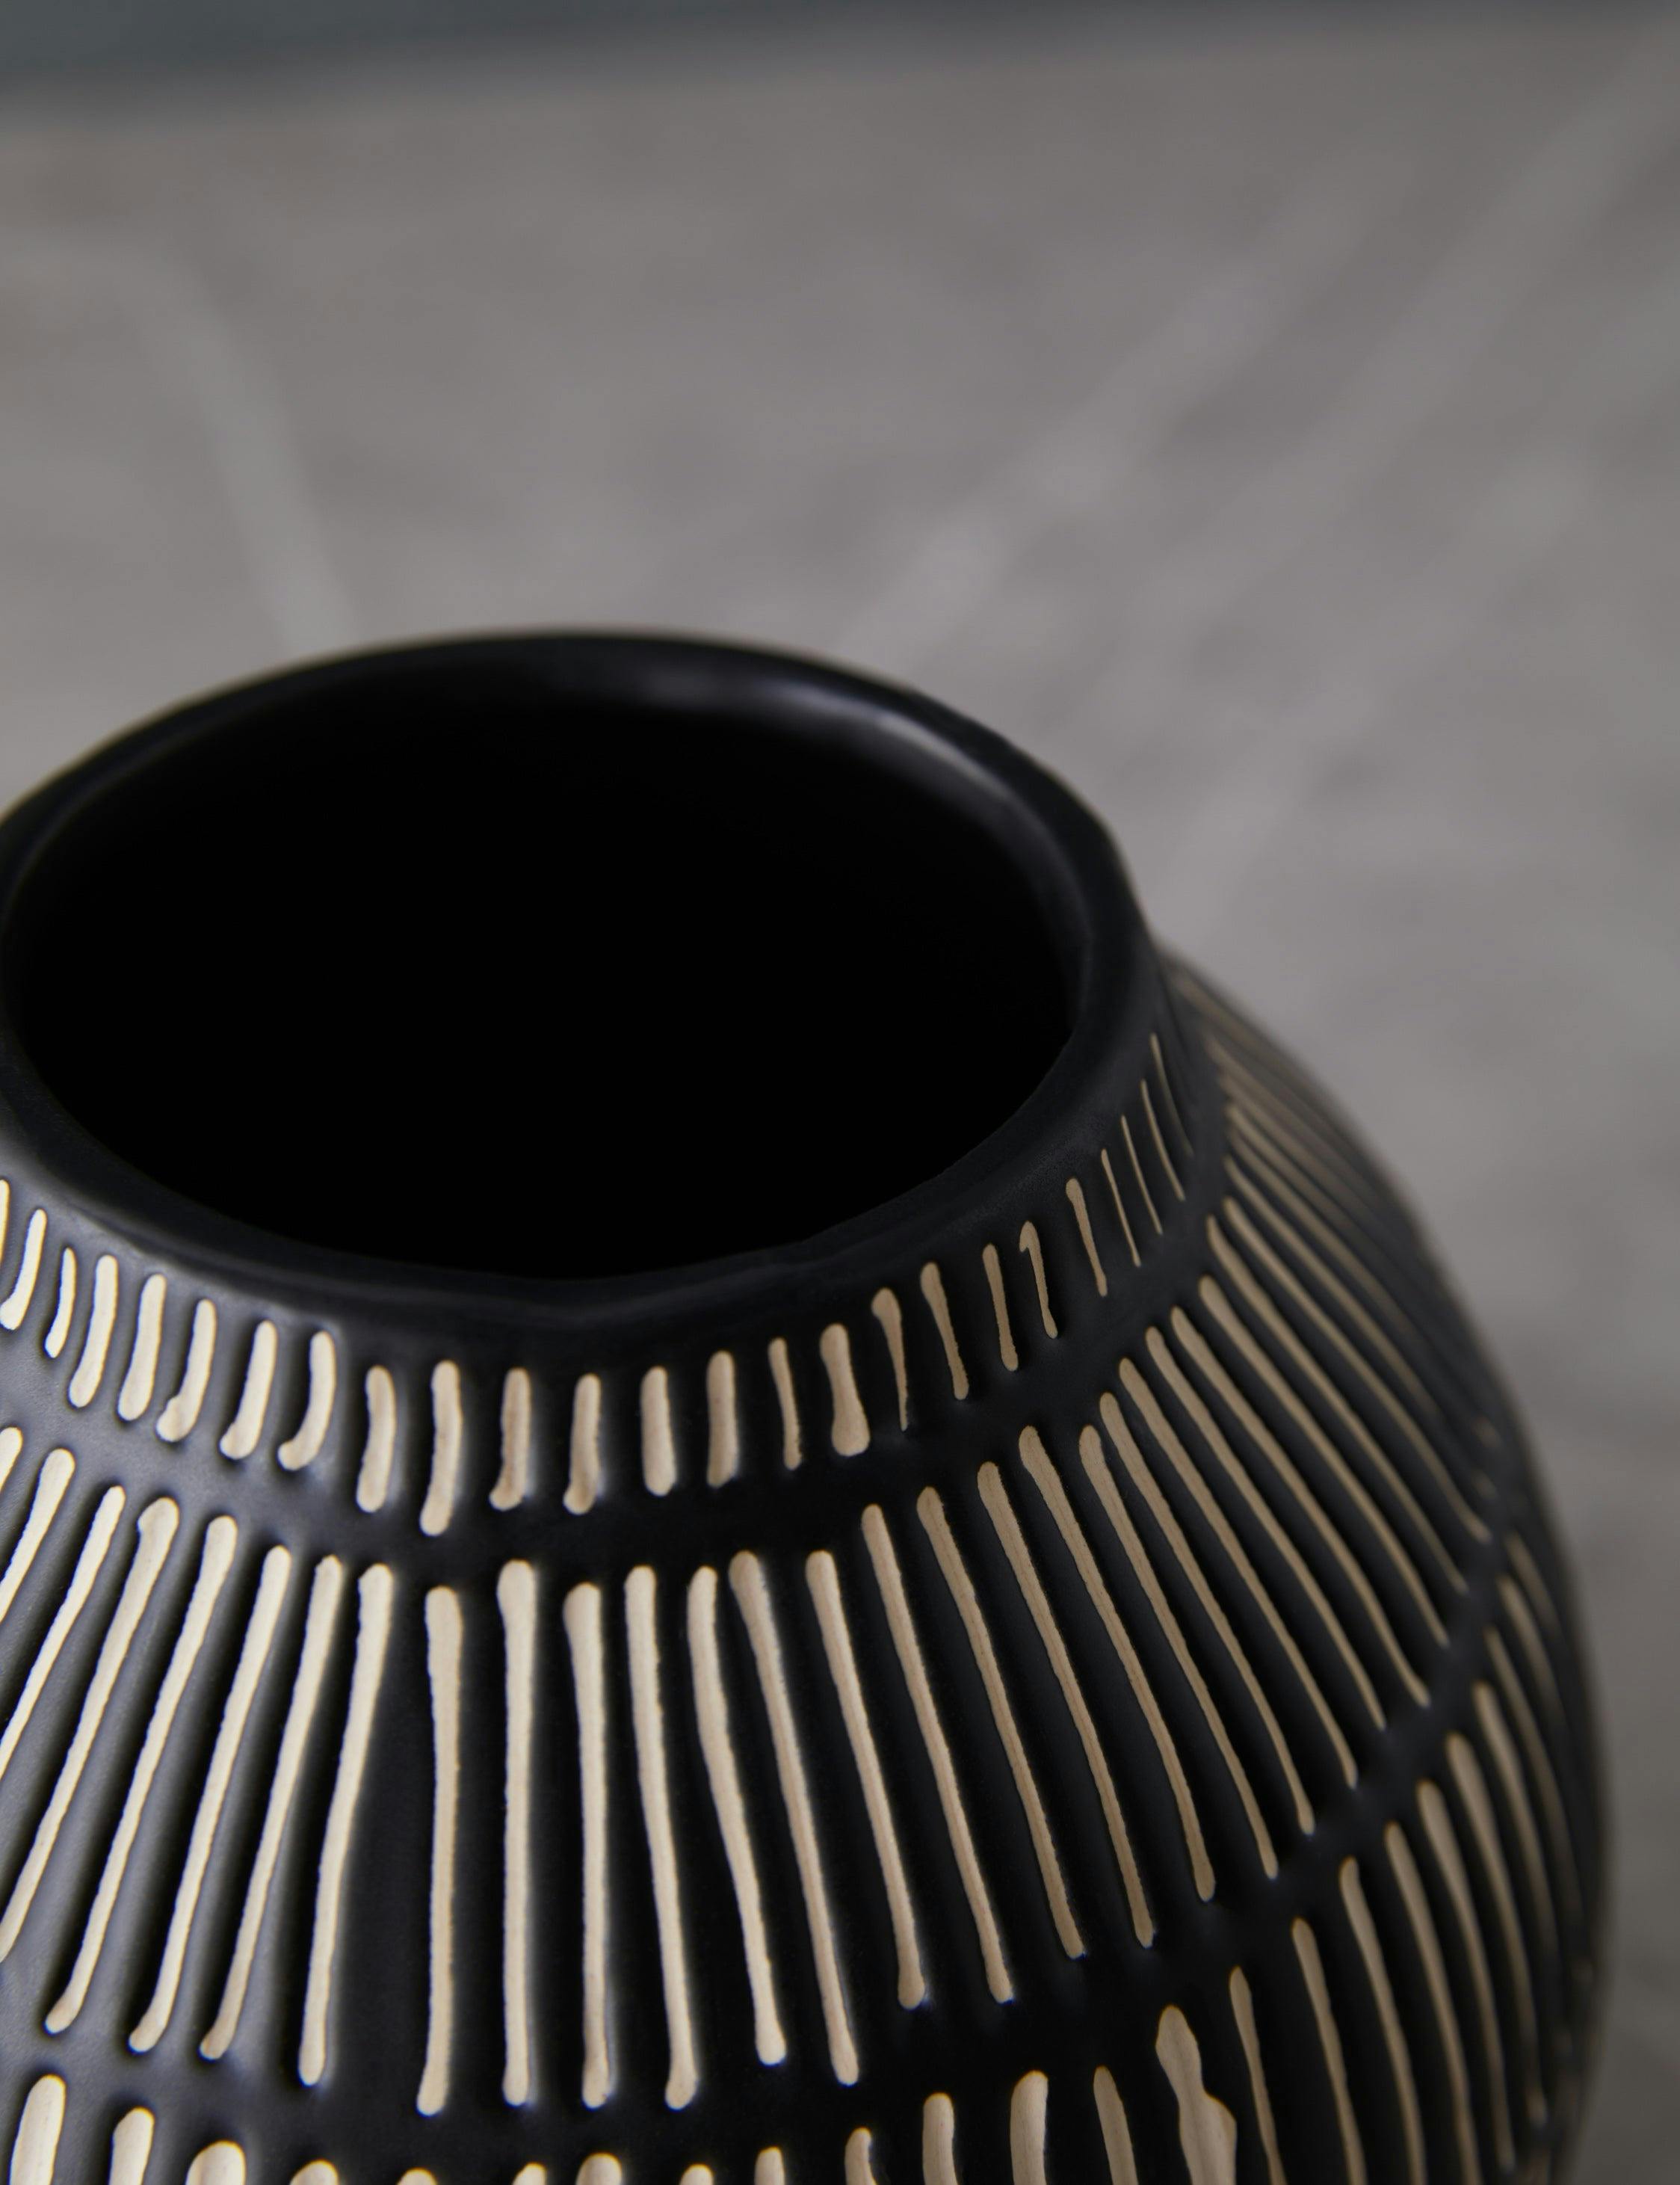 Artful Debossed Black & White Ceramic Table Vase 6.25"